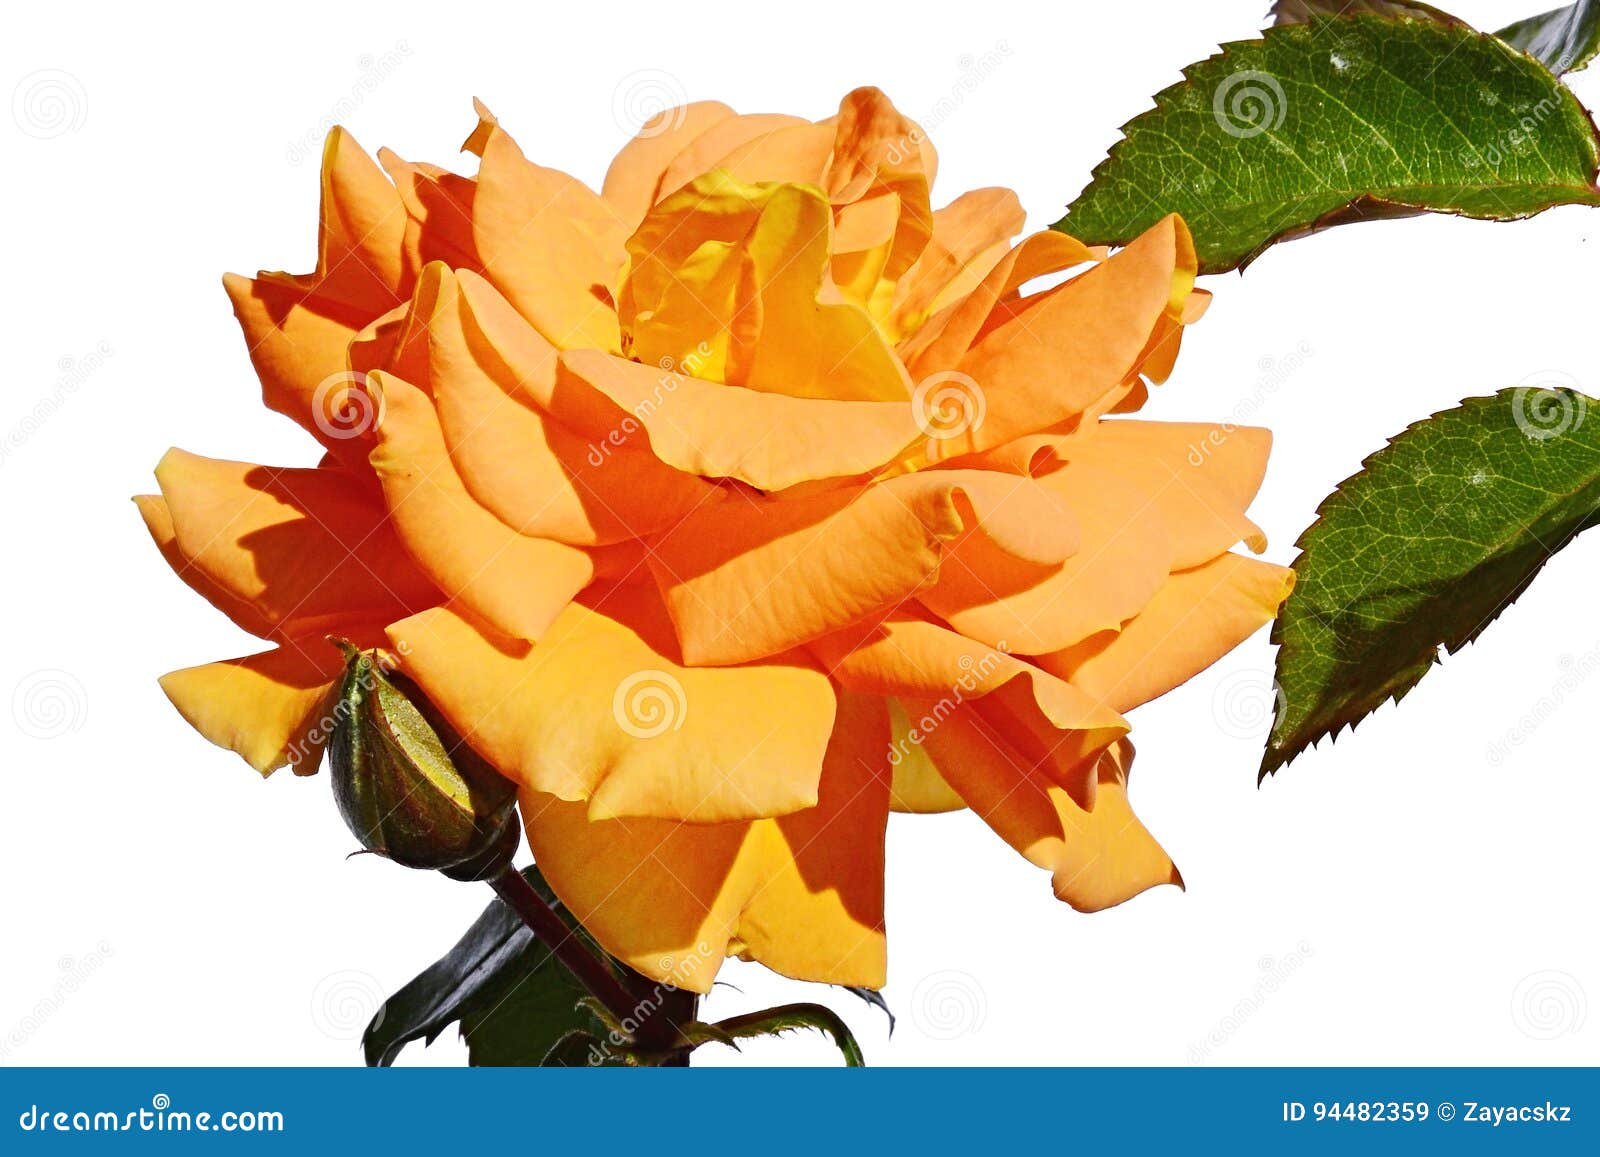 full blossoming light orange flower of rose goldelse, tantau 1999 on white background, jagged rose leaves visible